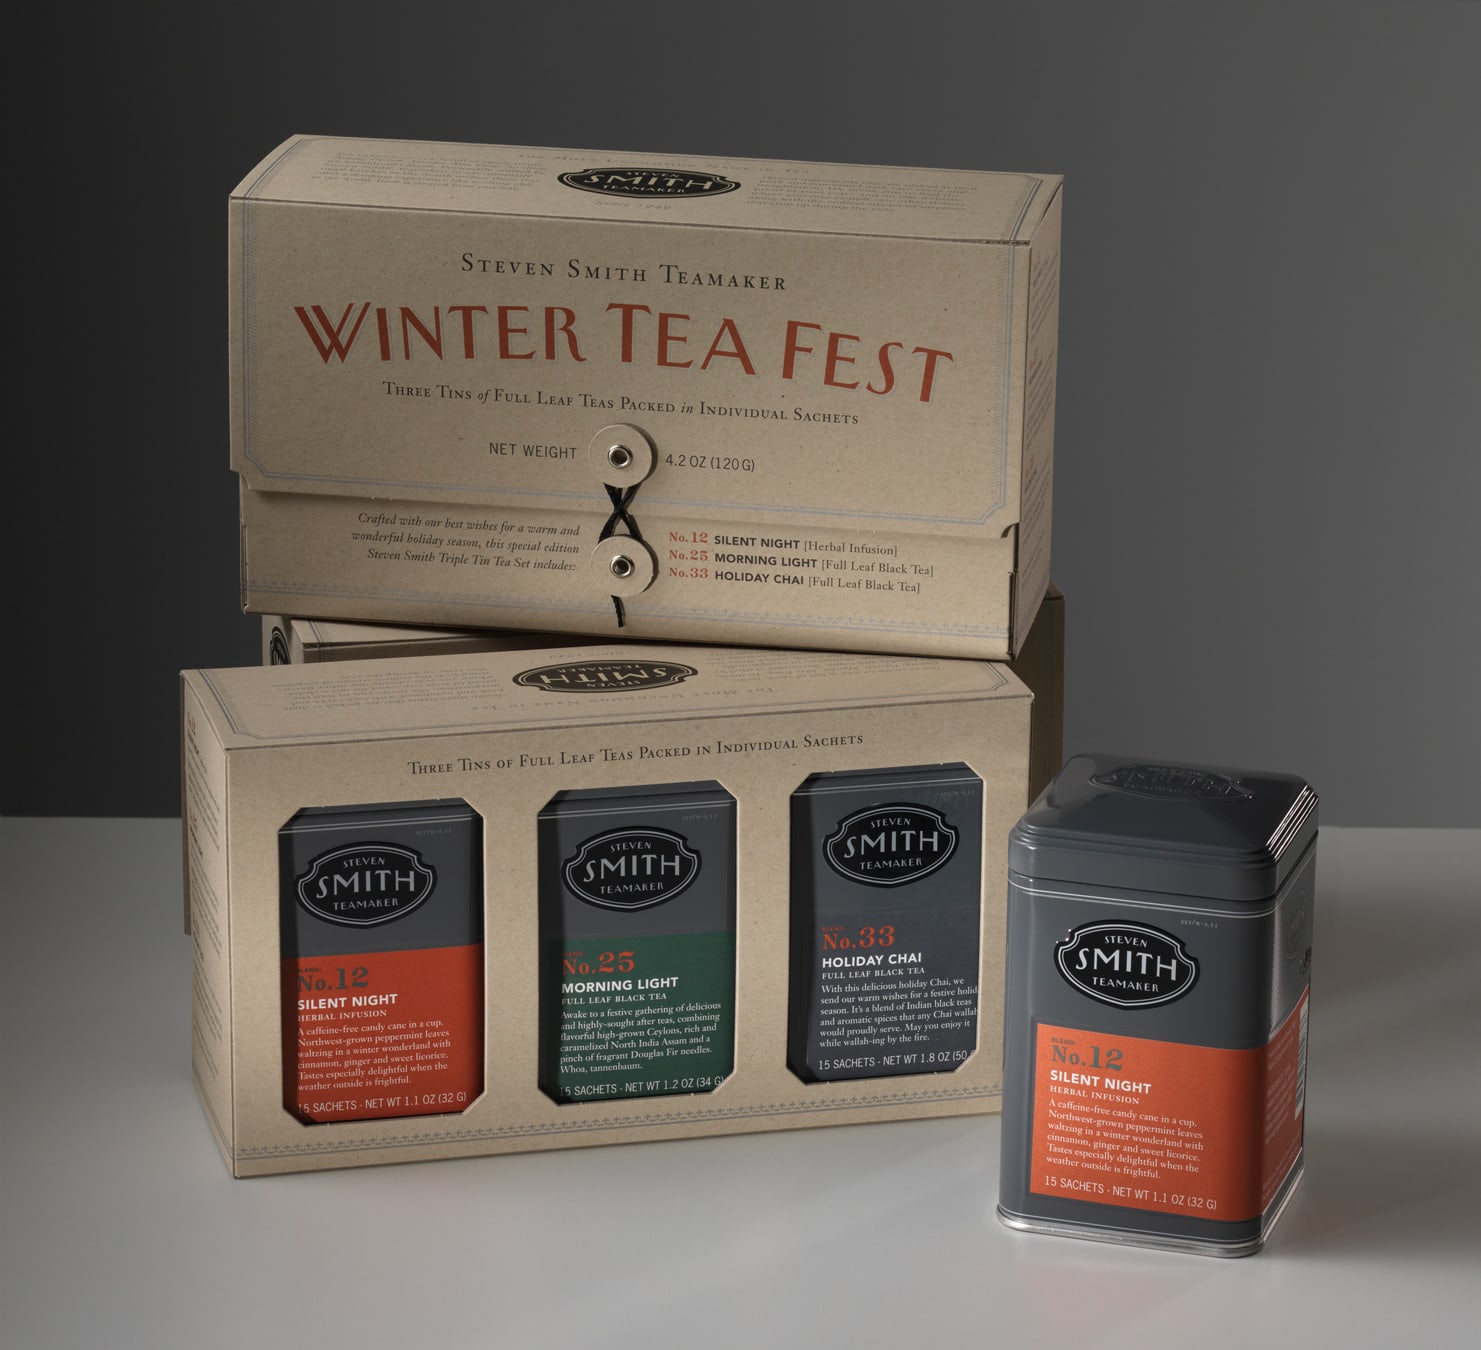 Steven Smith Teamaker tea packaging tins design